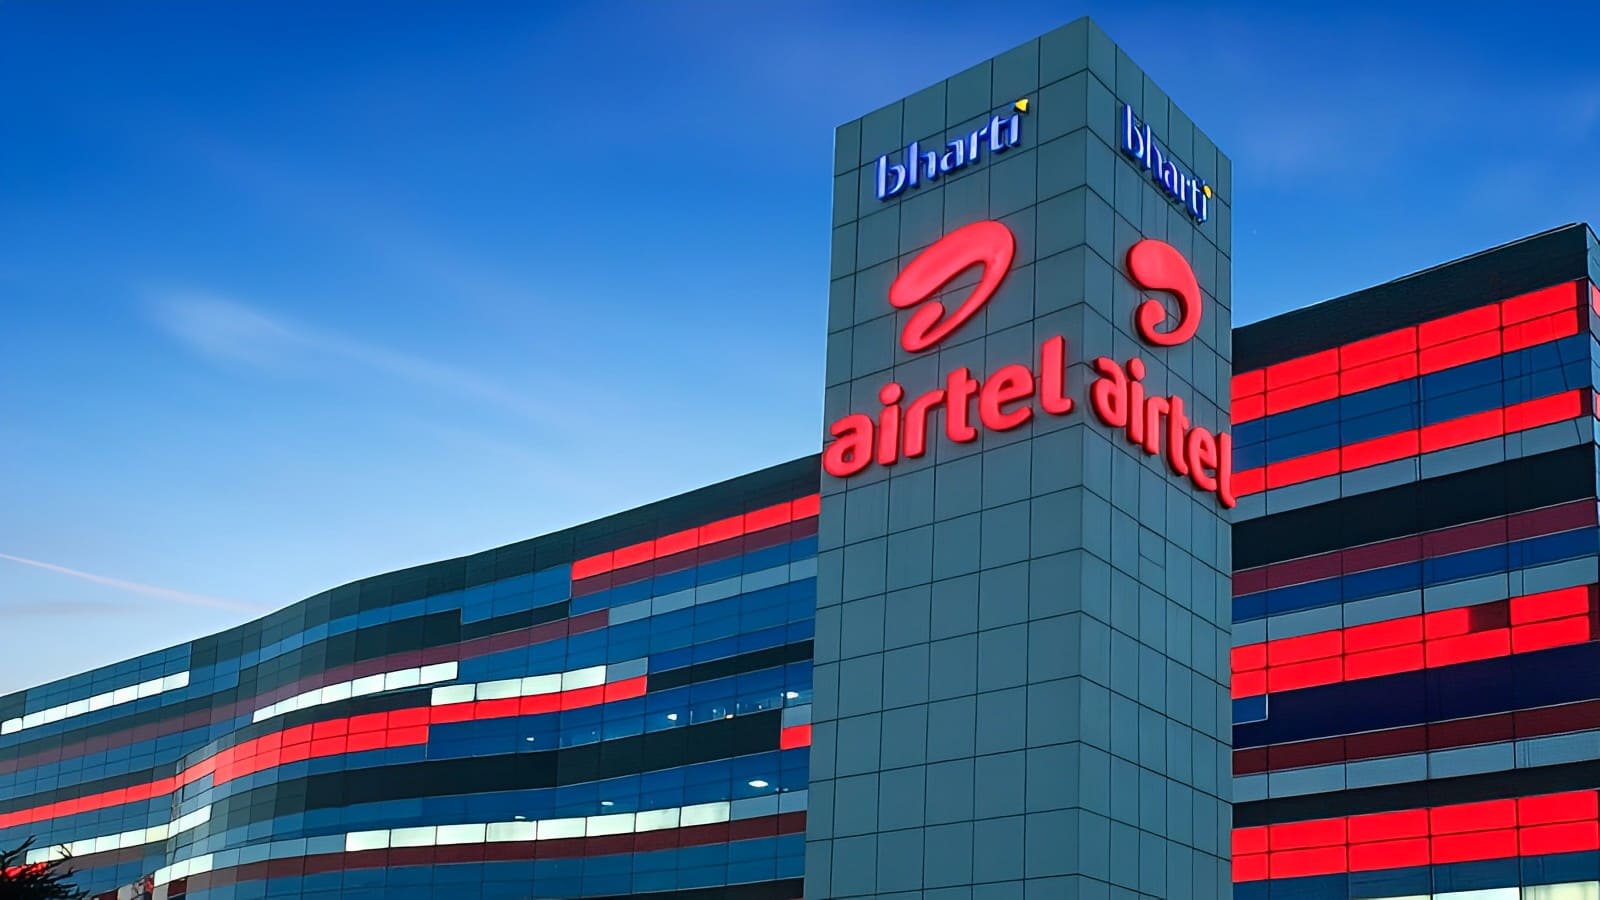 Dialog Axiata and Bharti Airtel Merge to Form Largest Sri Lankan Telecom Operator